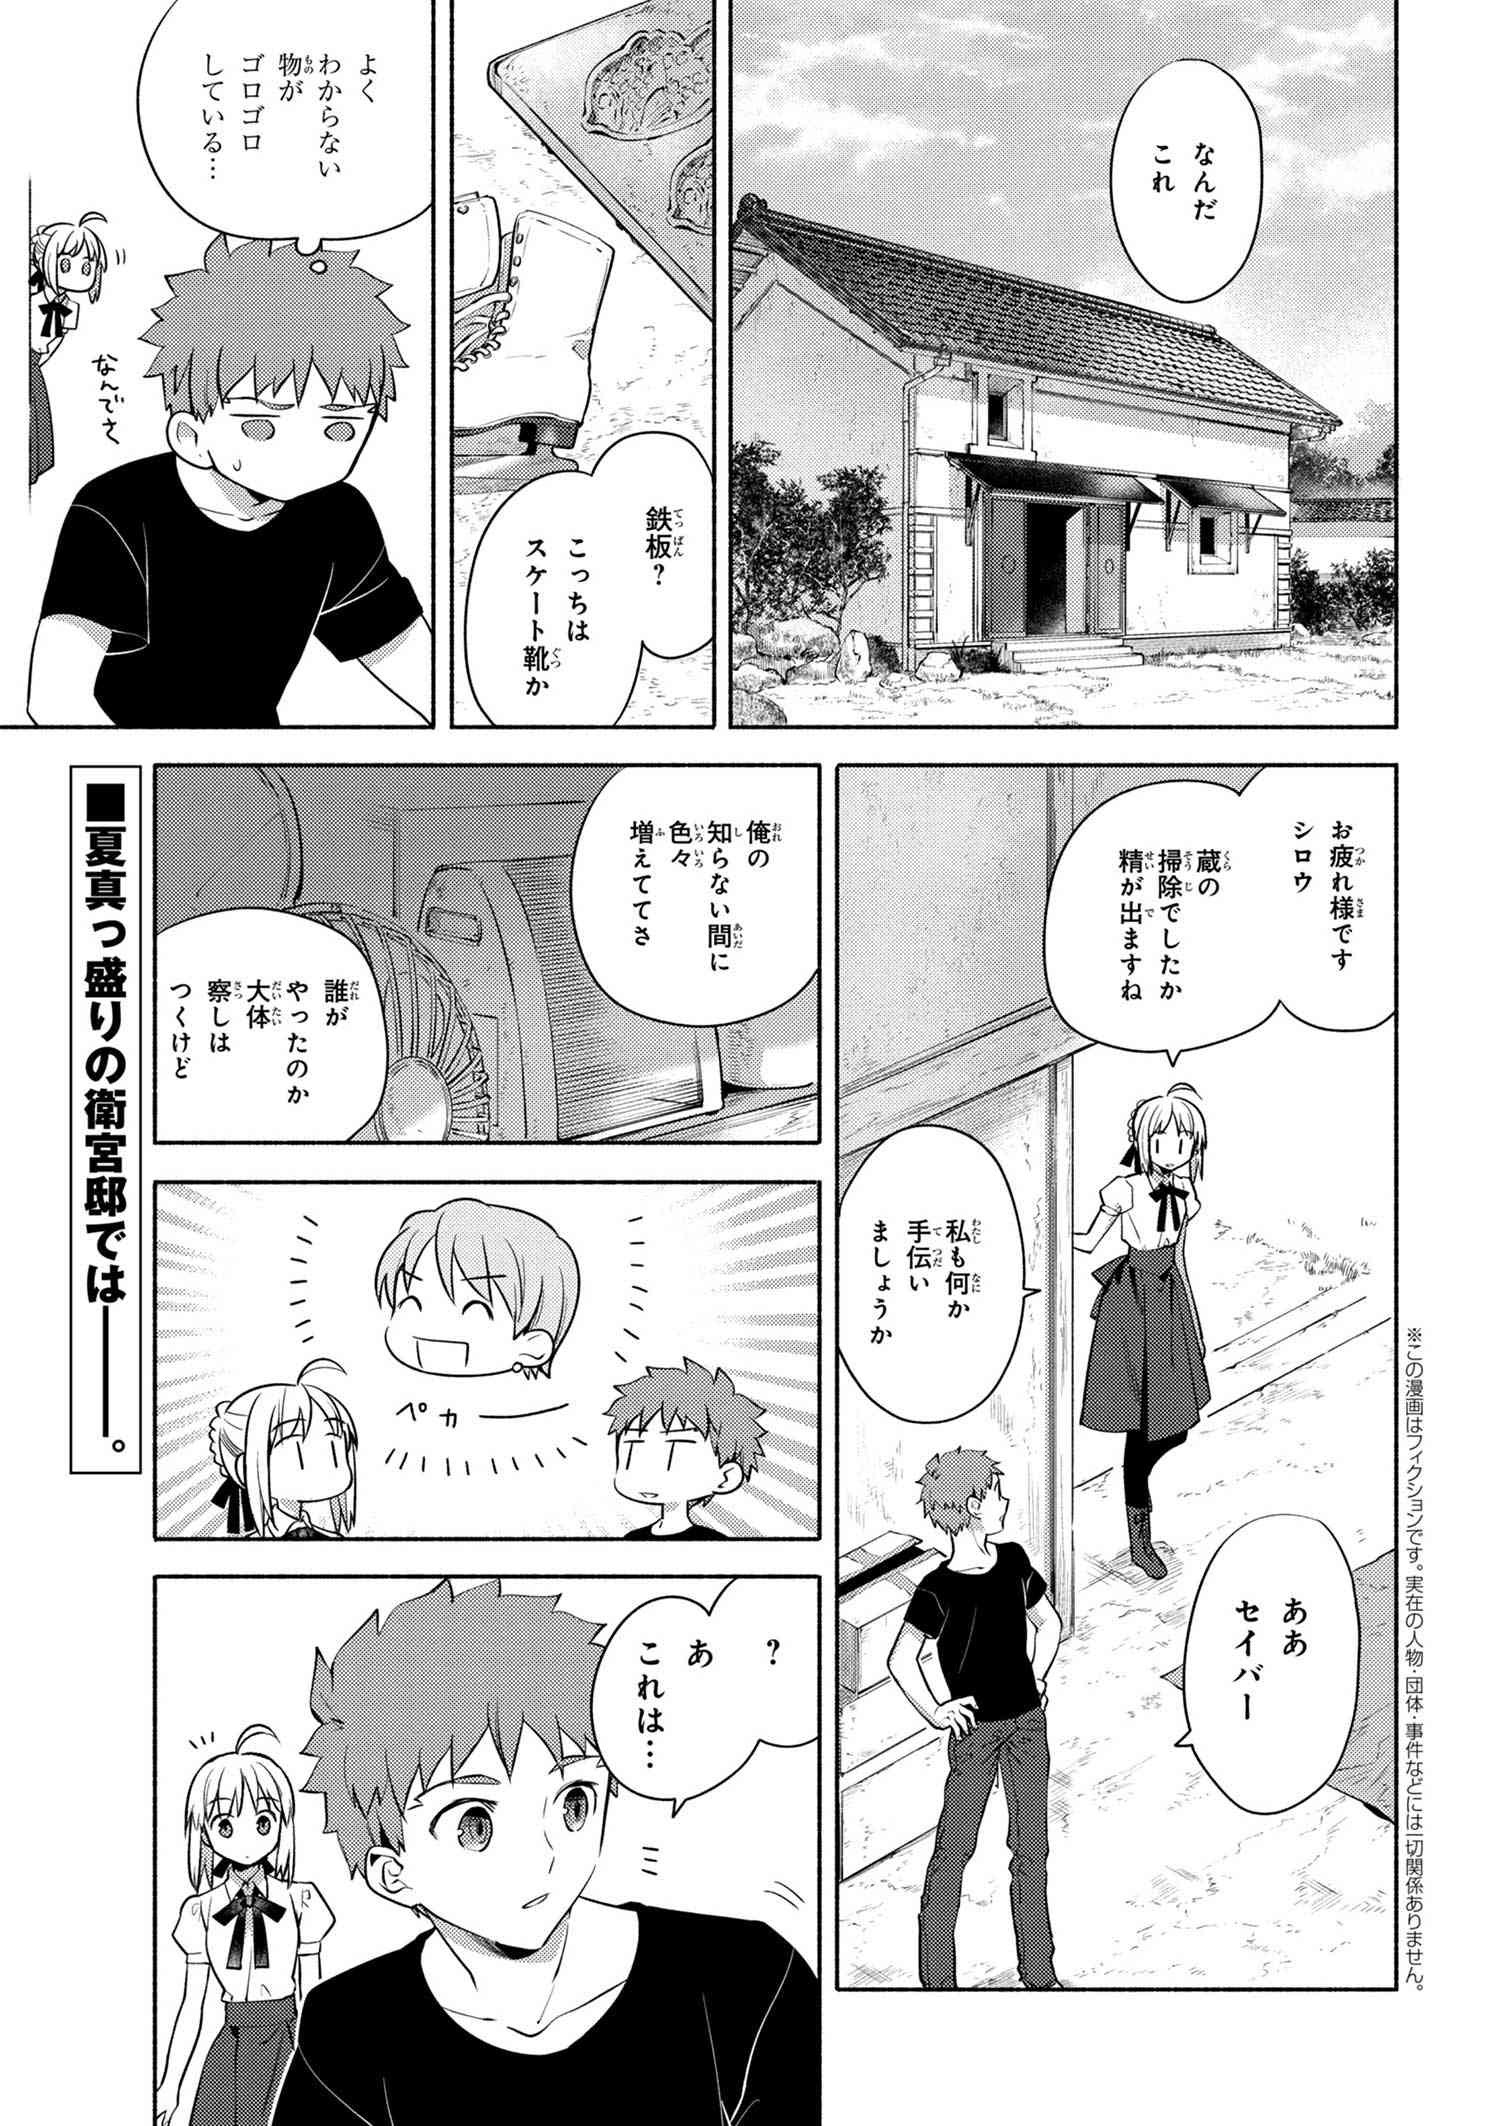 Emiya-san Chi no Kyou no Gohan - Chapter 16 - Page 1